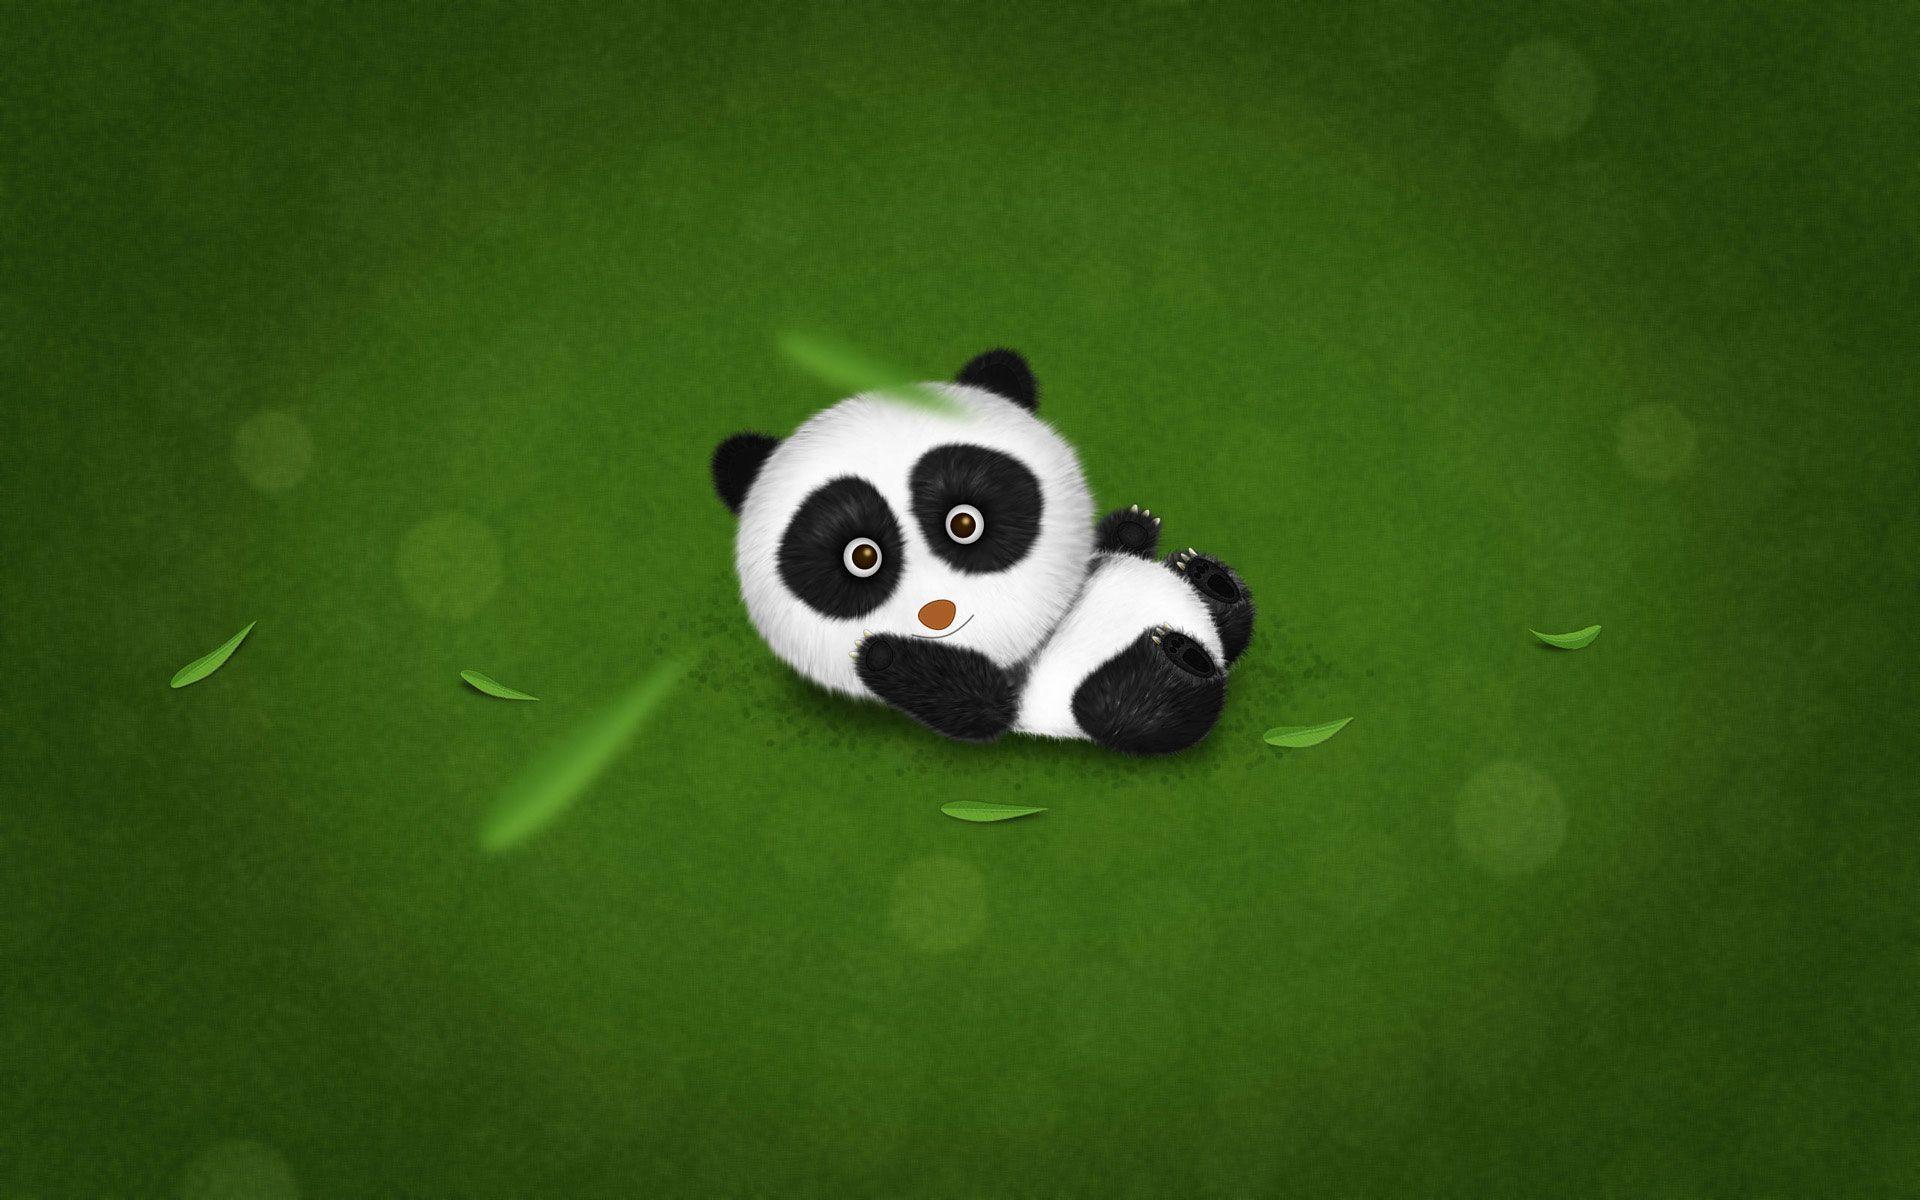 Cute Panda Cartoon Wallpaper Hd Images amp Pictures   Becuo